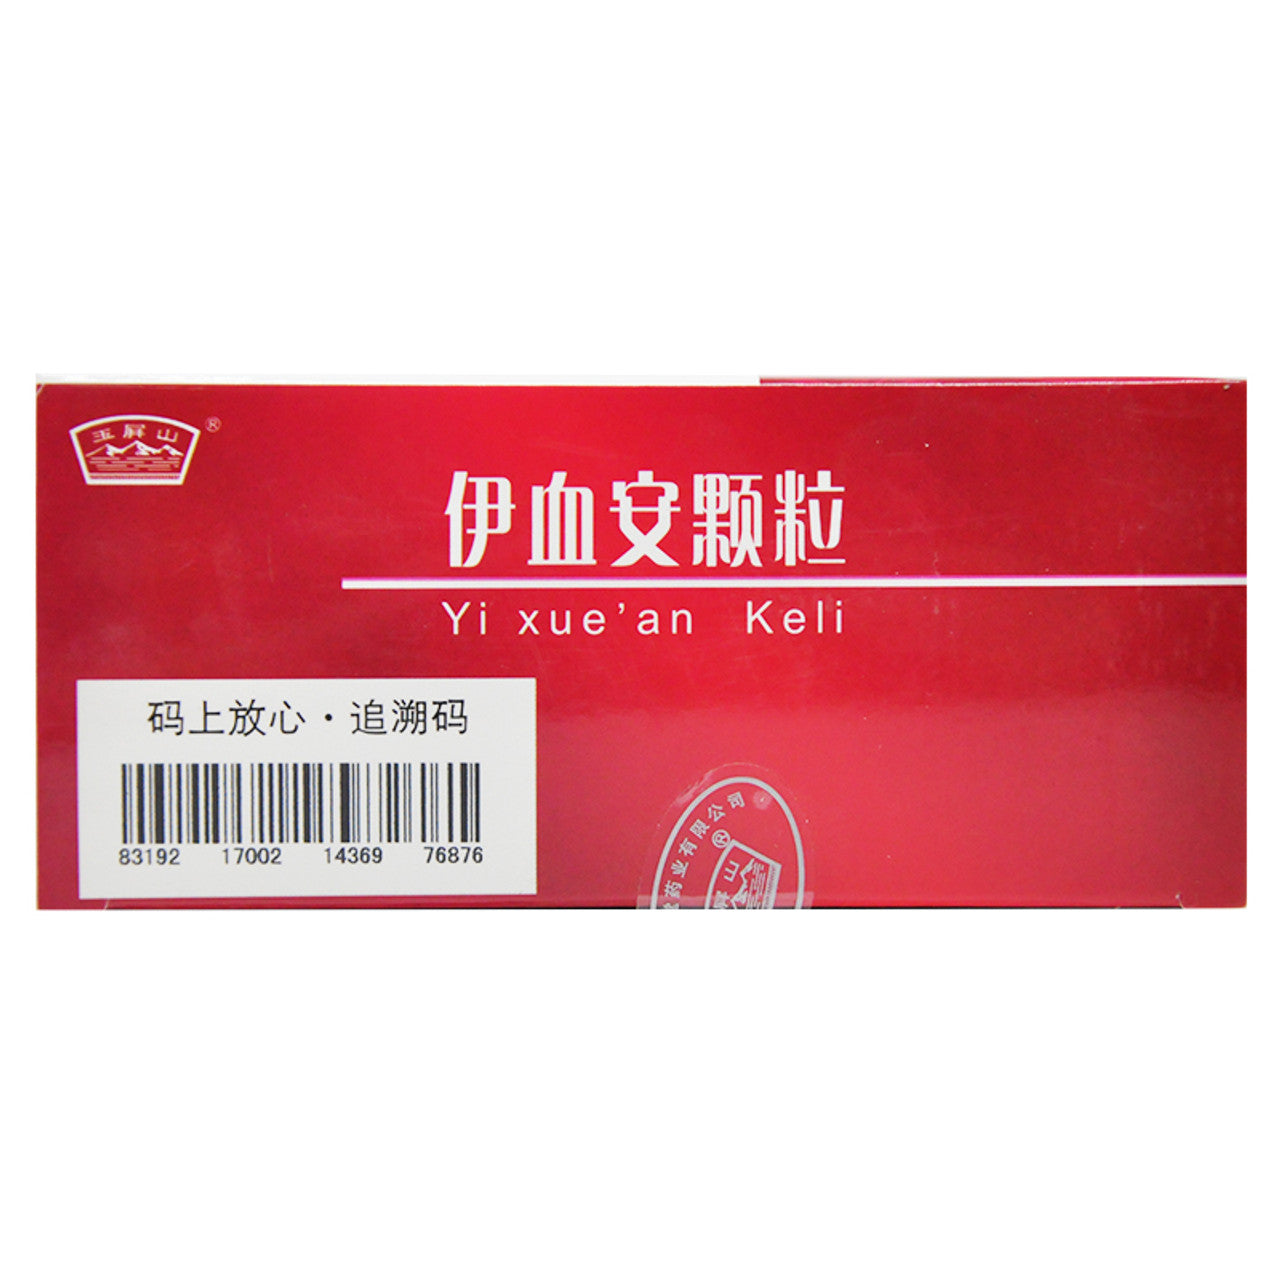 China Herb. Brand Yupingshan. Yixue'an Keli or Yi Xue An Ke Li or YiXueAnKeLi or Yixue'an Granules or Yi Xue An Granules for Postpartum Hemorrhage.